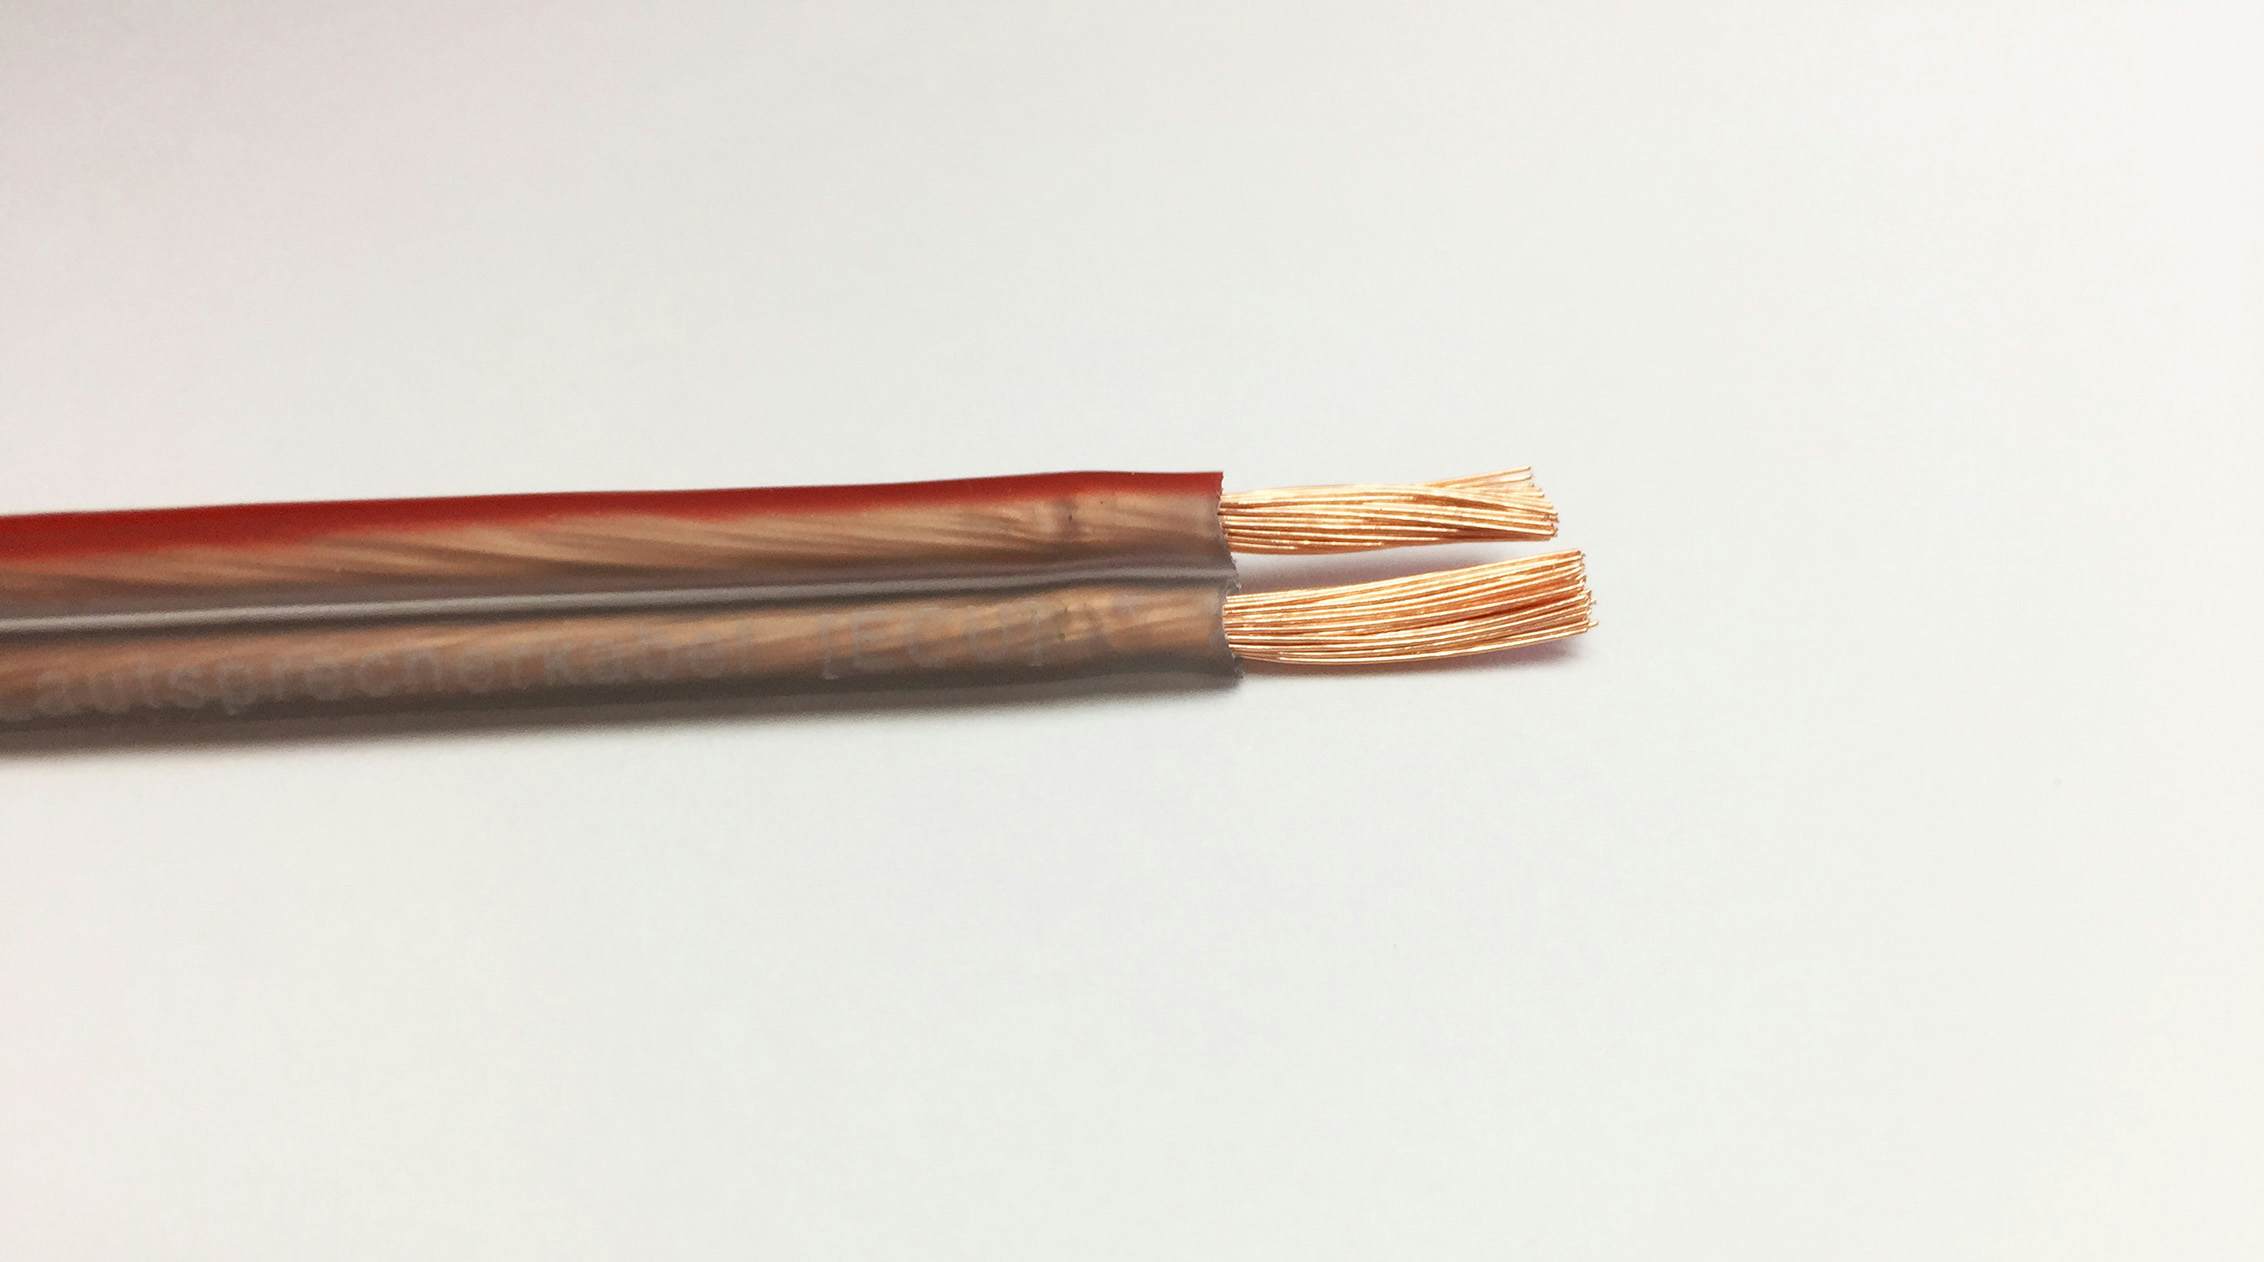 Zvočniški kabel 2 x 2,5 mm - High Quality OFC Copper